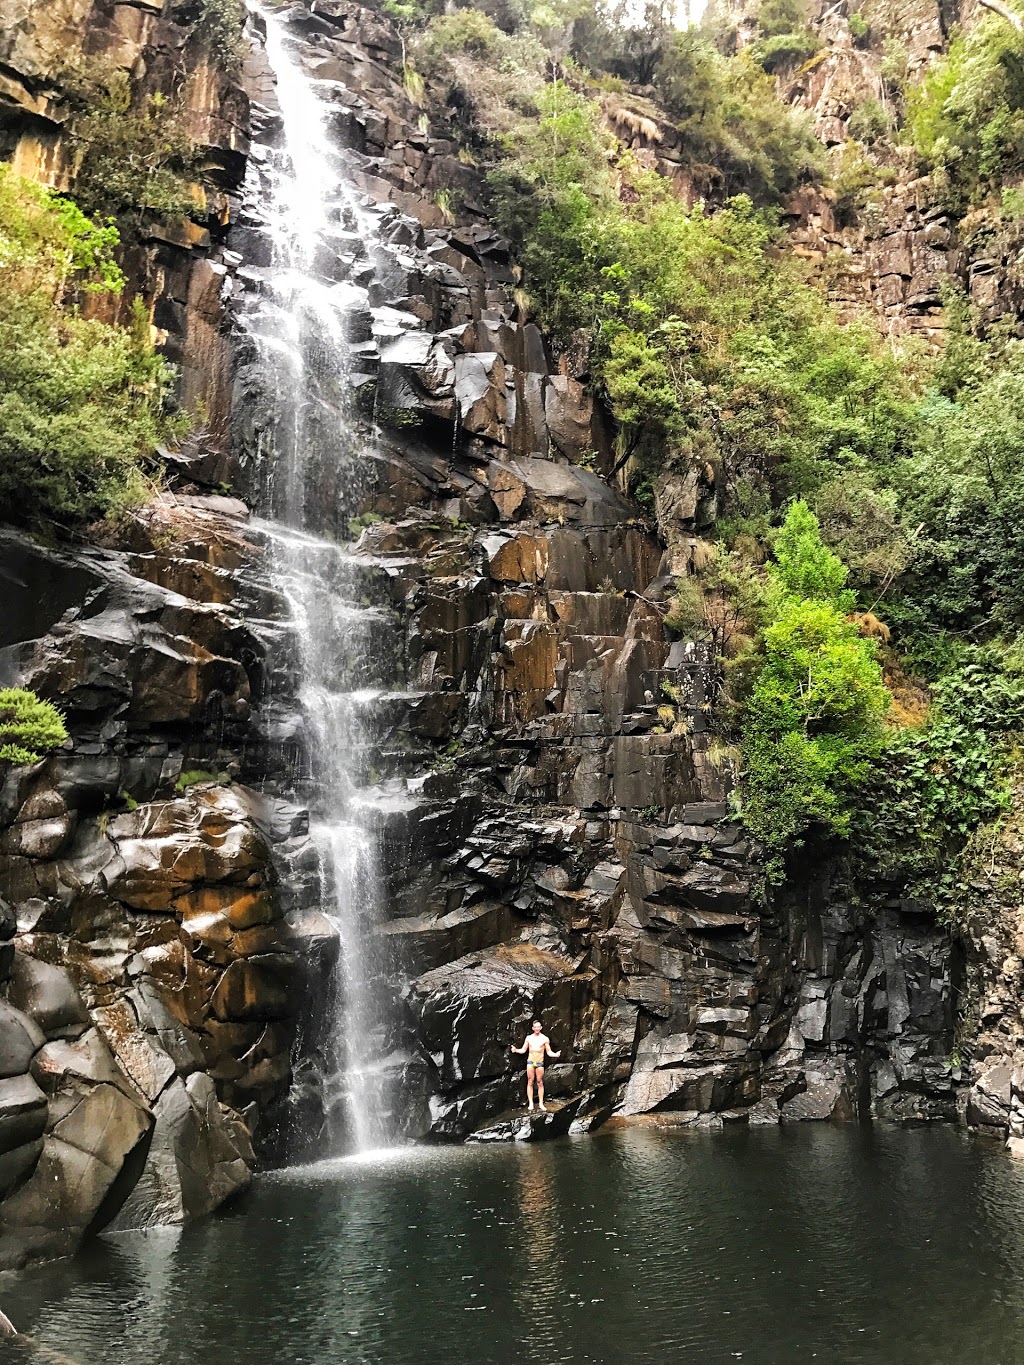 Meetus Falls Forest Reserve | park | Tasmania, Australia